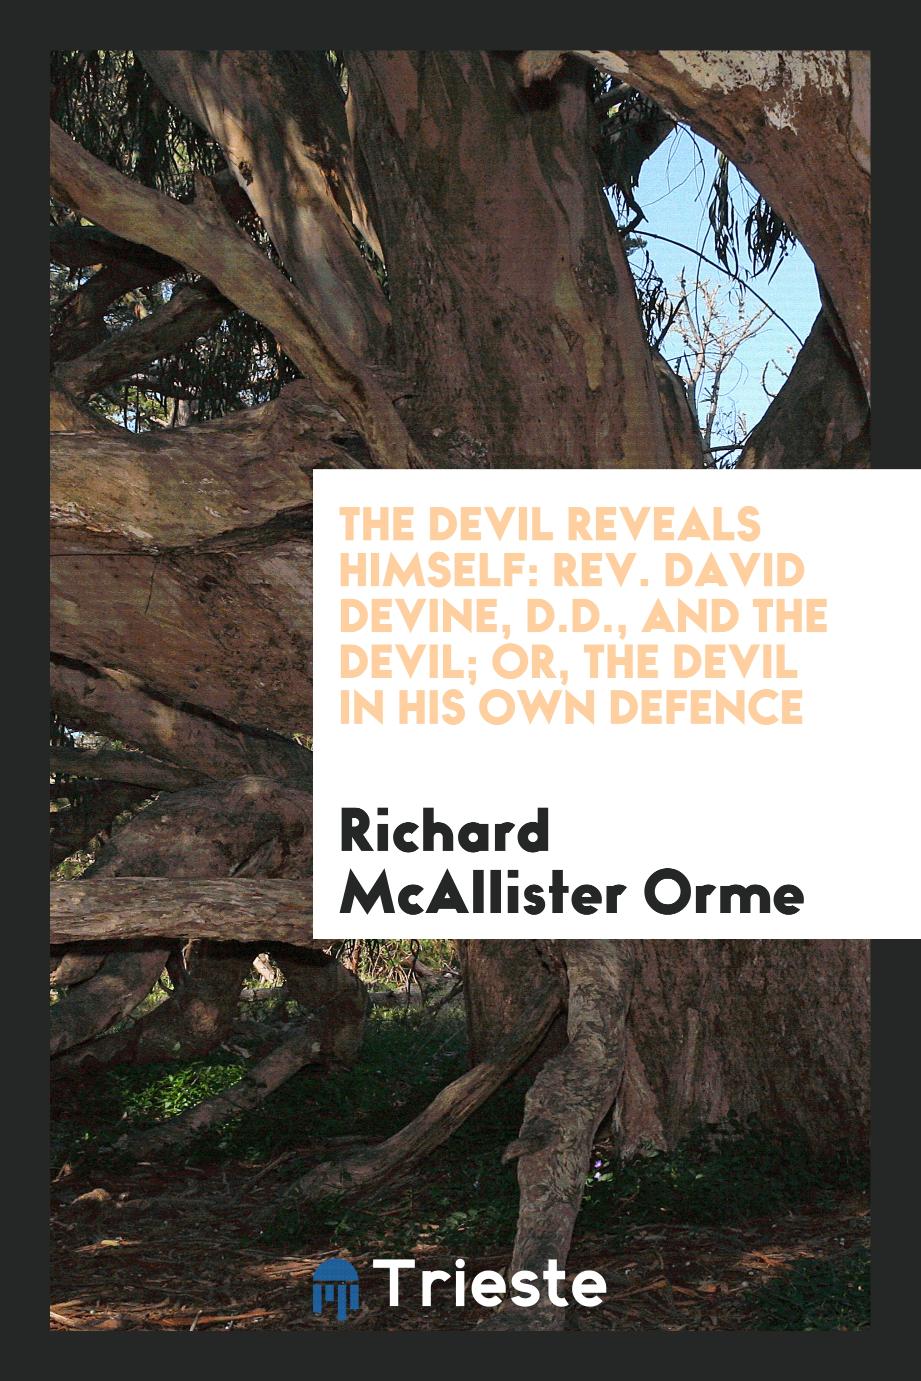 The Devil Reveals Himself: Rev. David Devine, D.D., and the Devil; Or, the Devil in His Own Defence